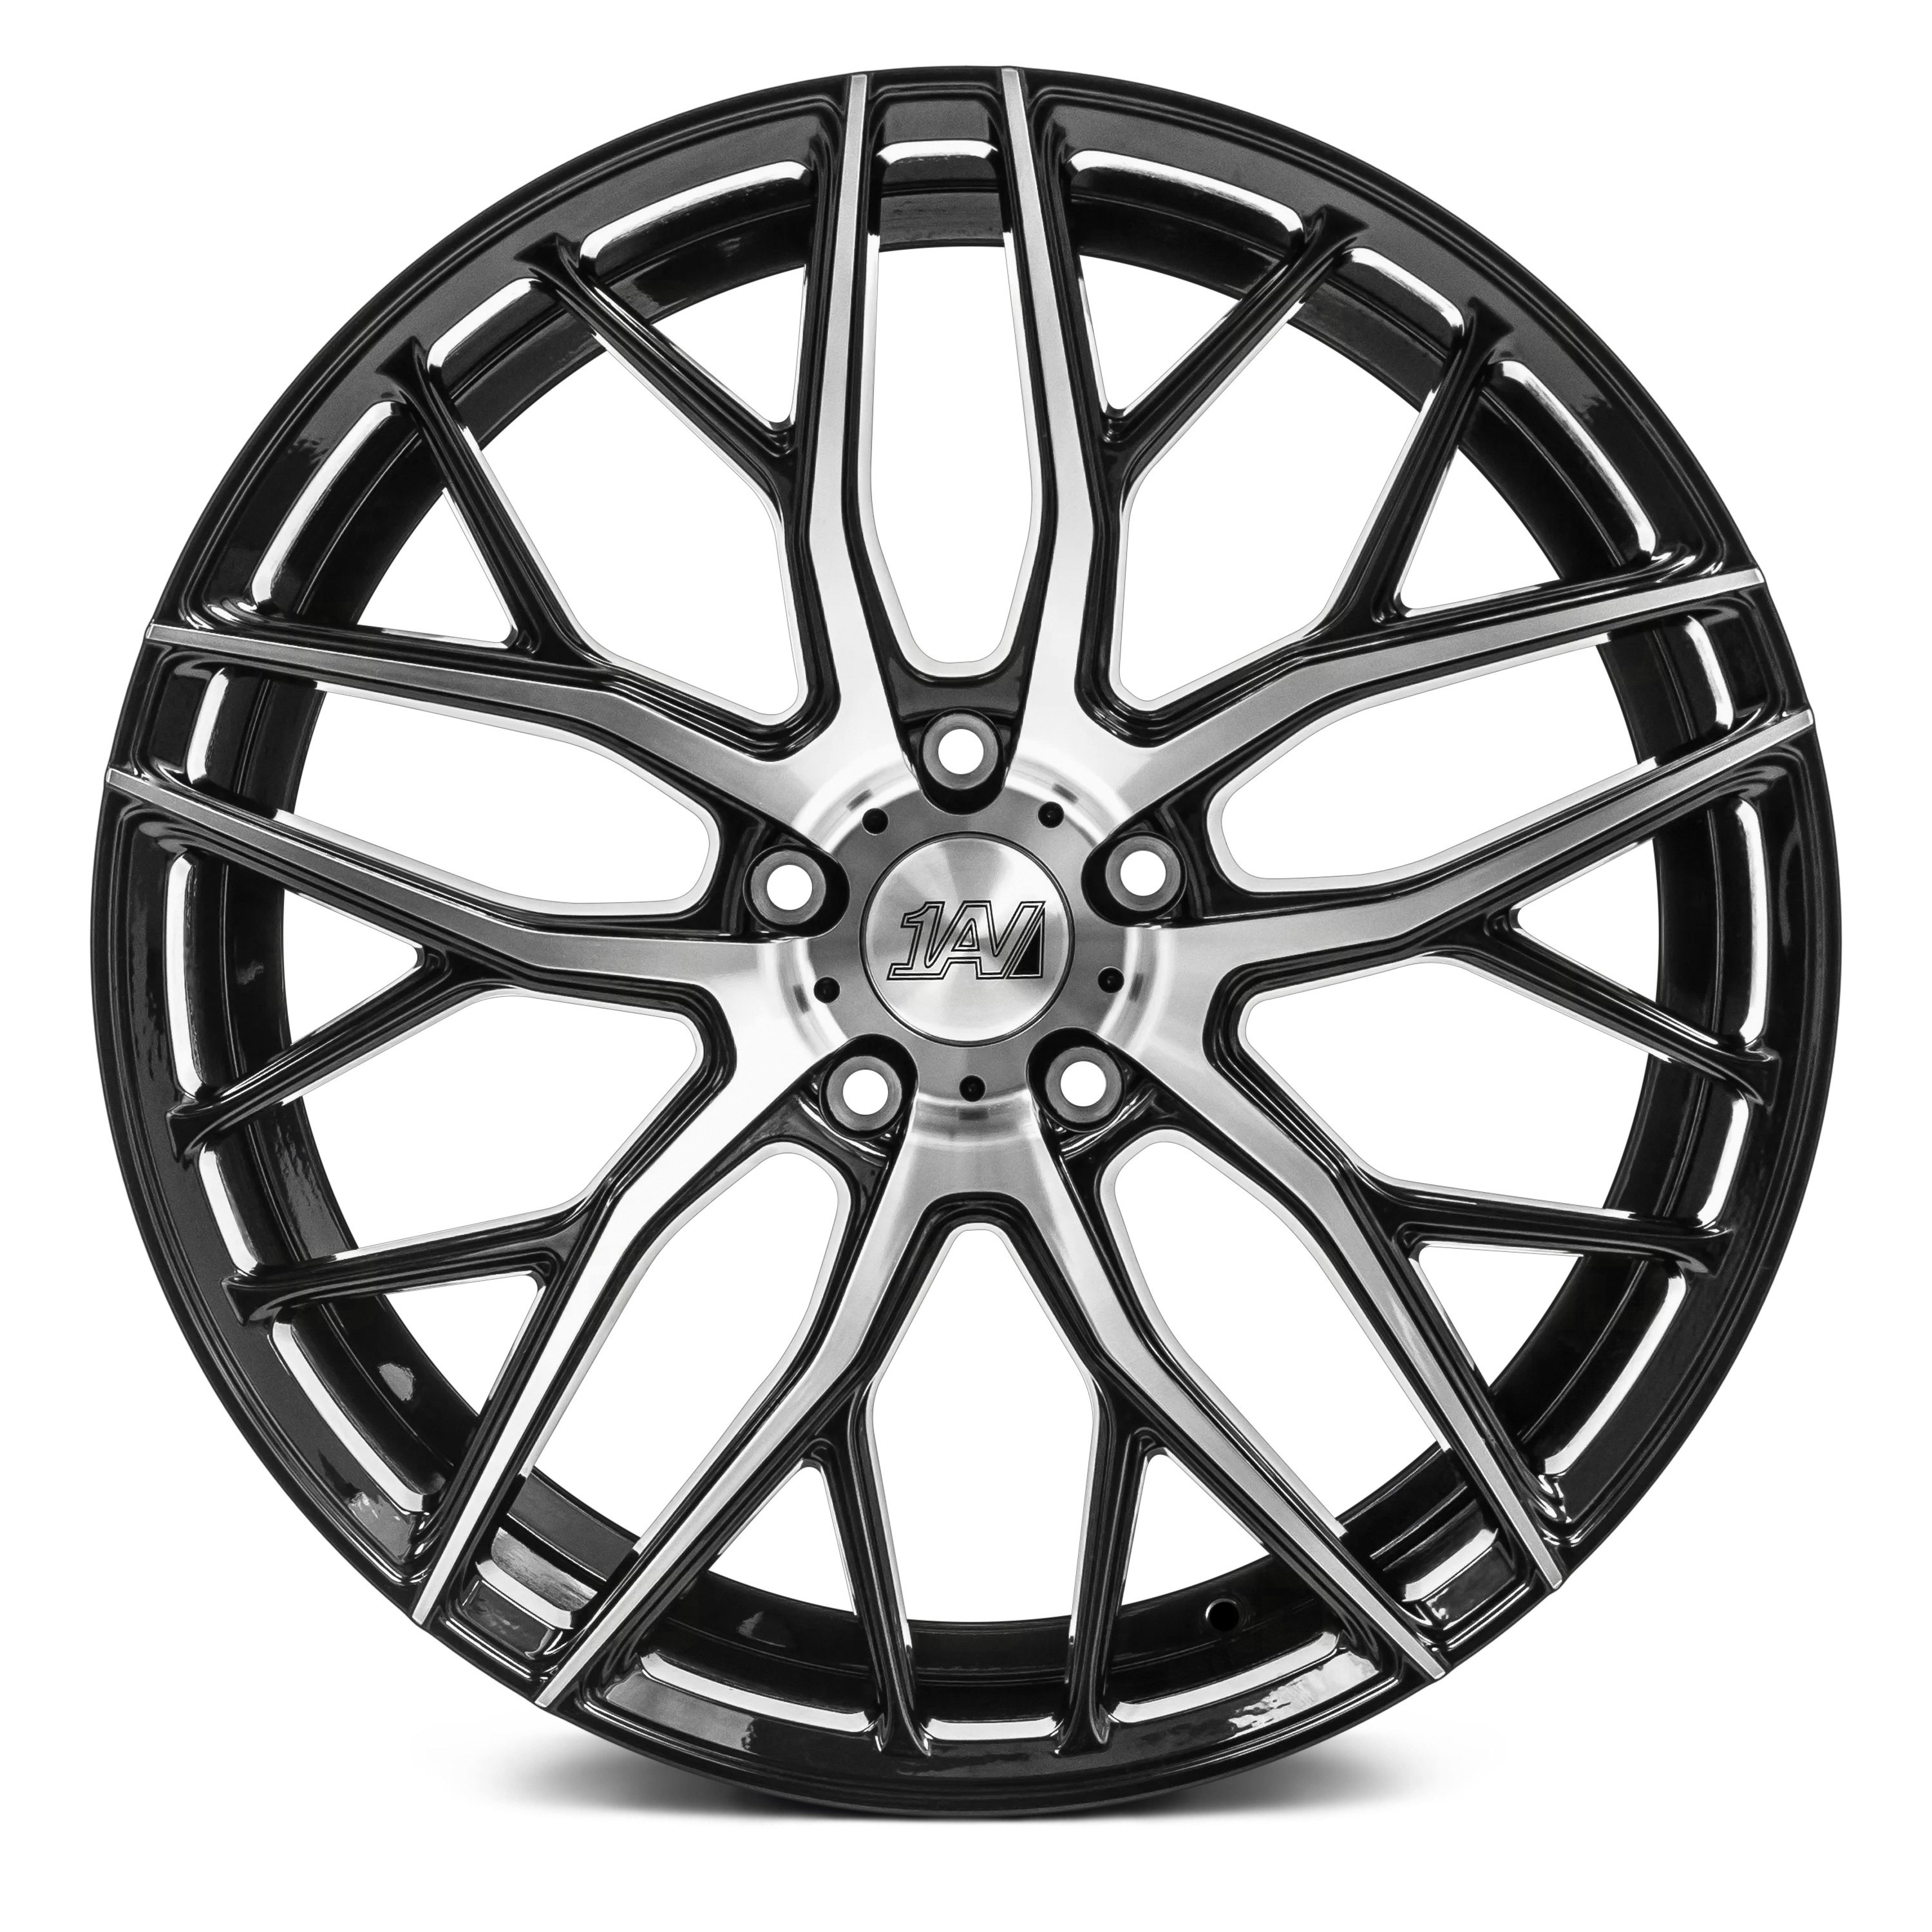 1AV® ZX11 Wheels - Gloss Black with Polished Face Rims 